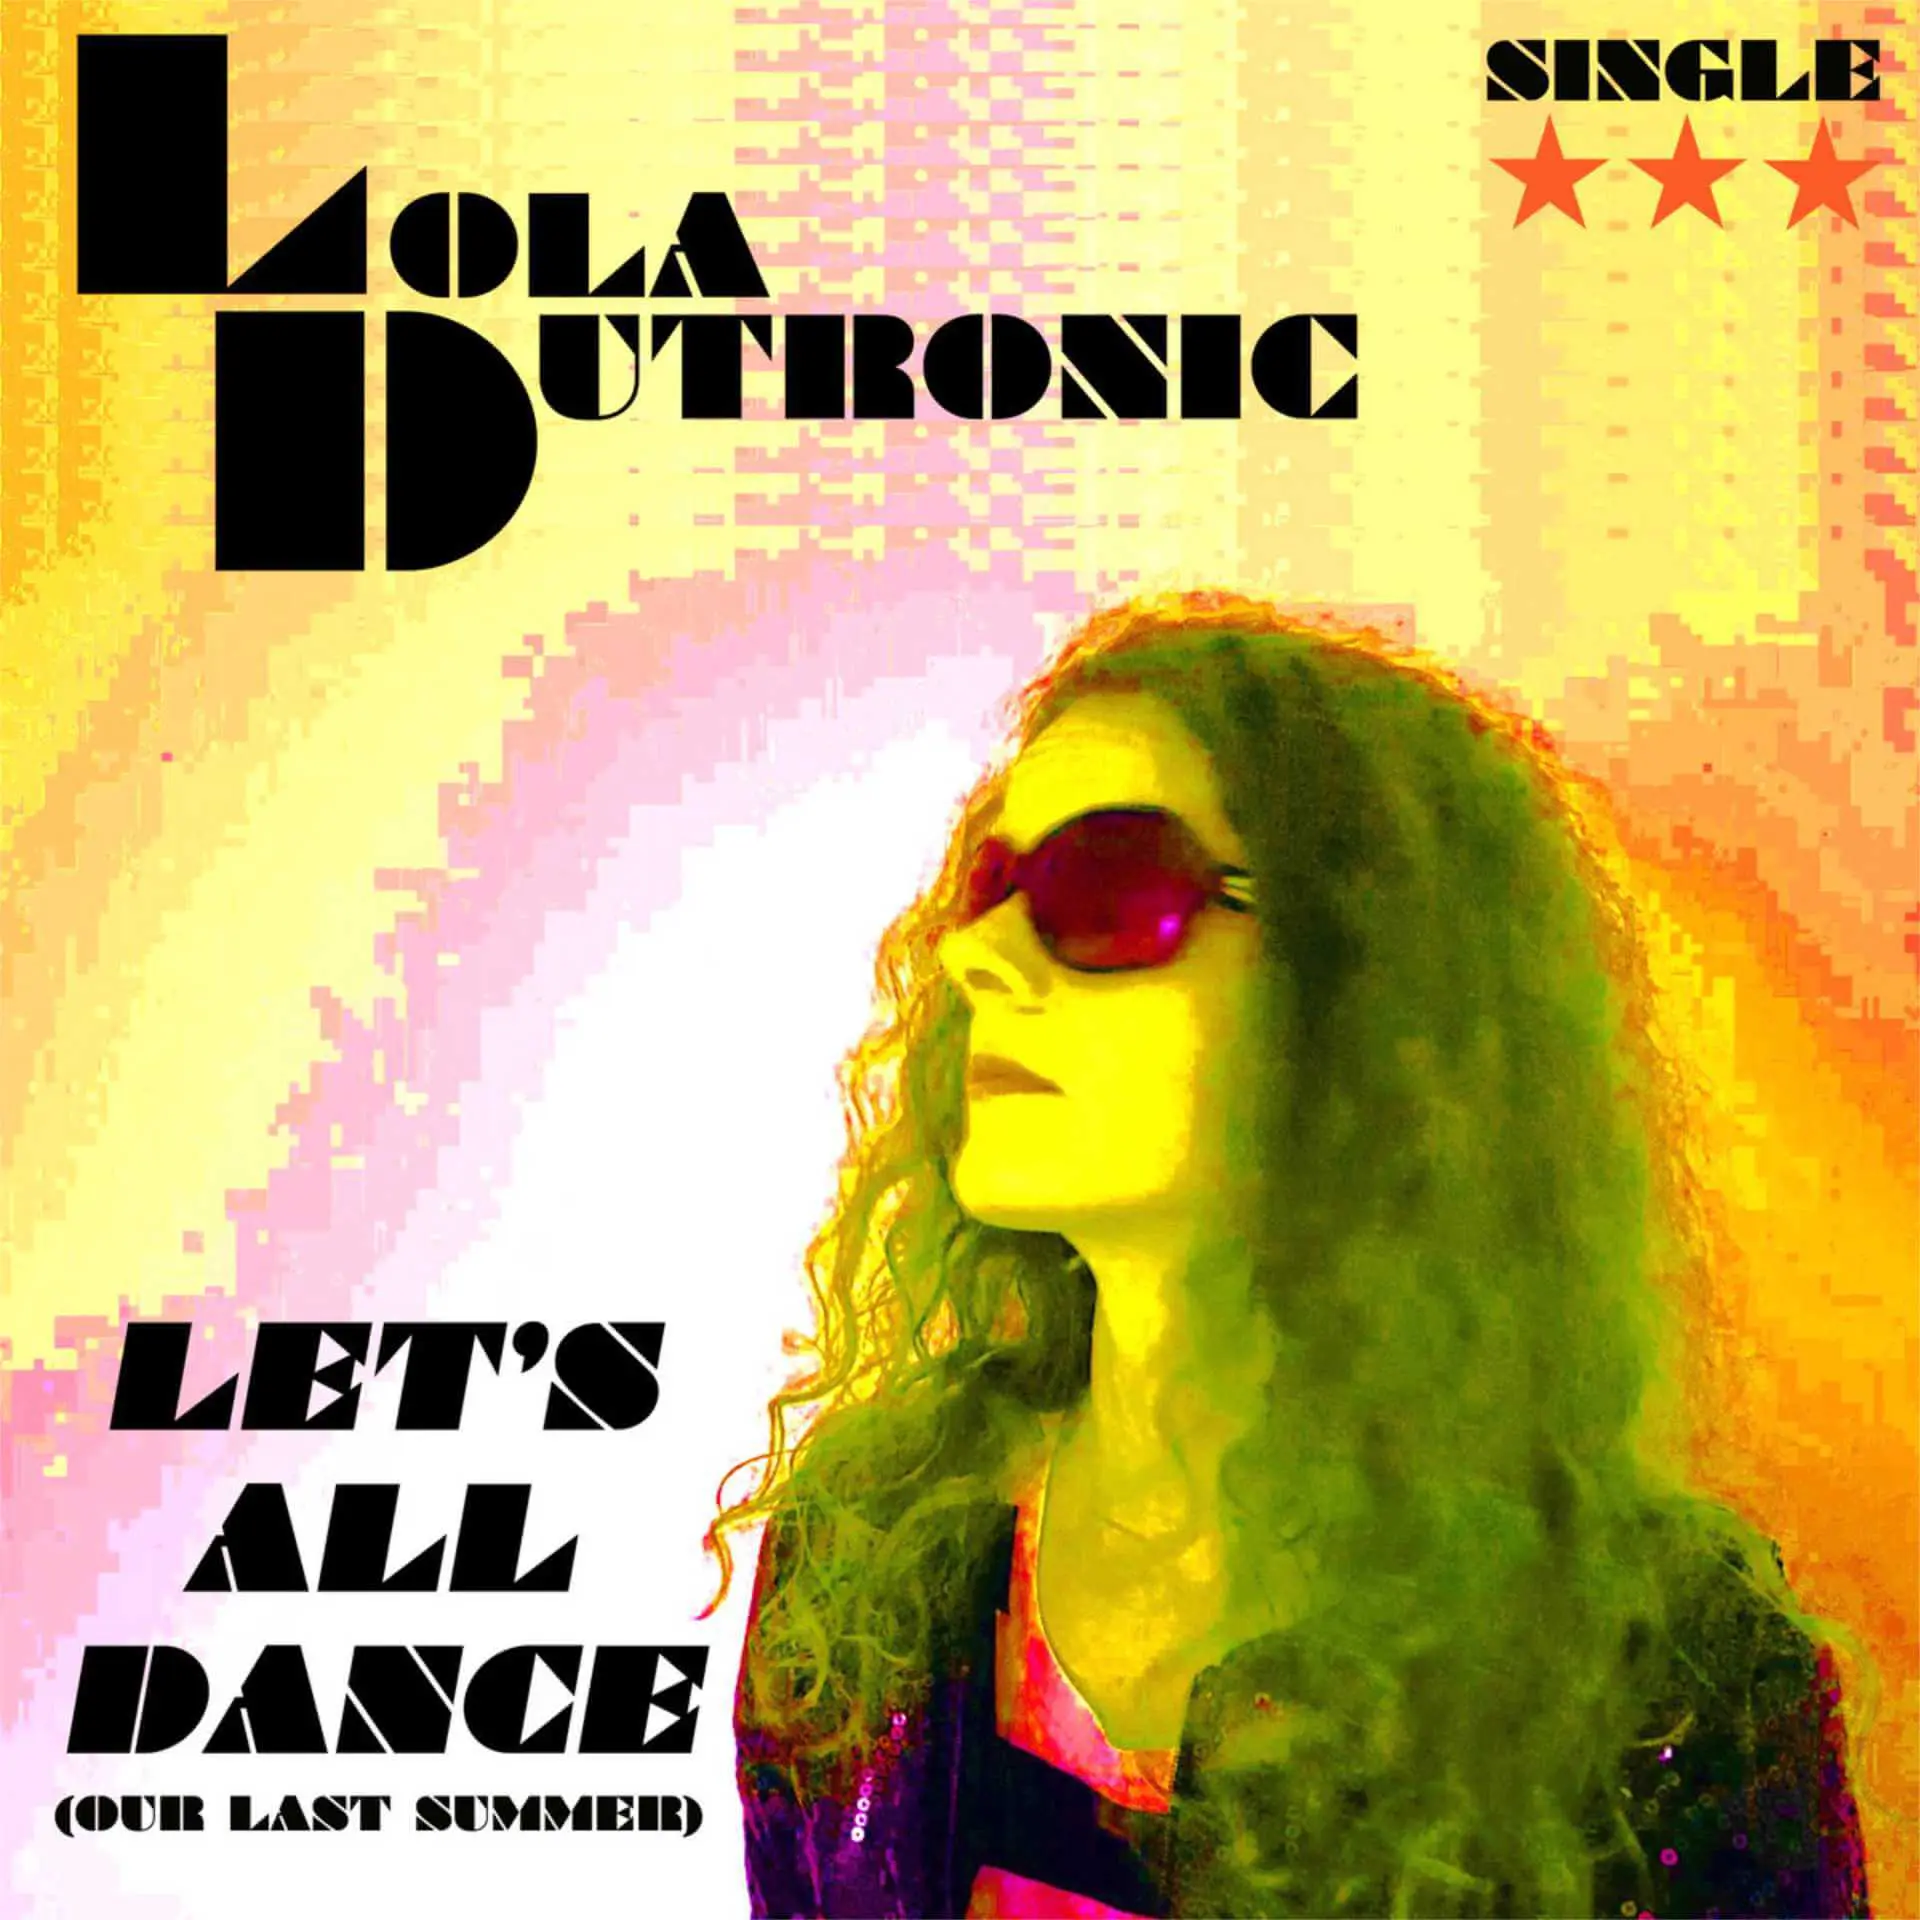 lola dutronic lets all dance